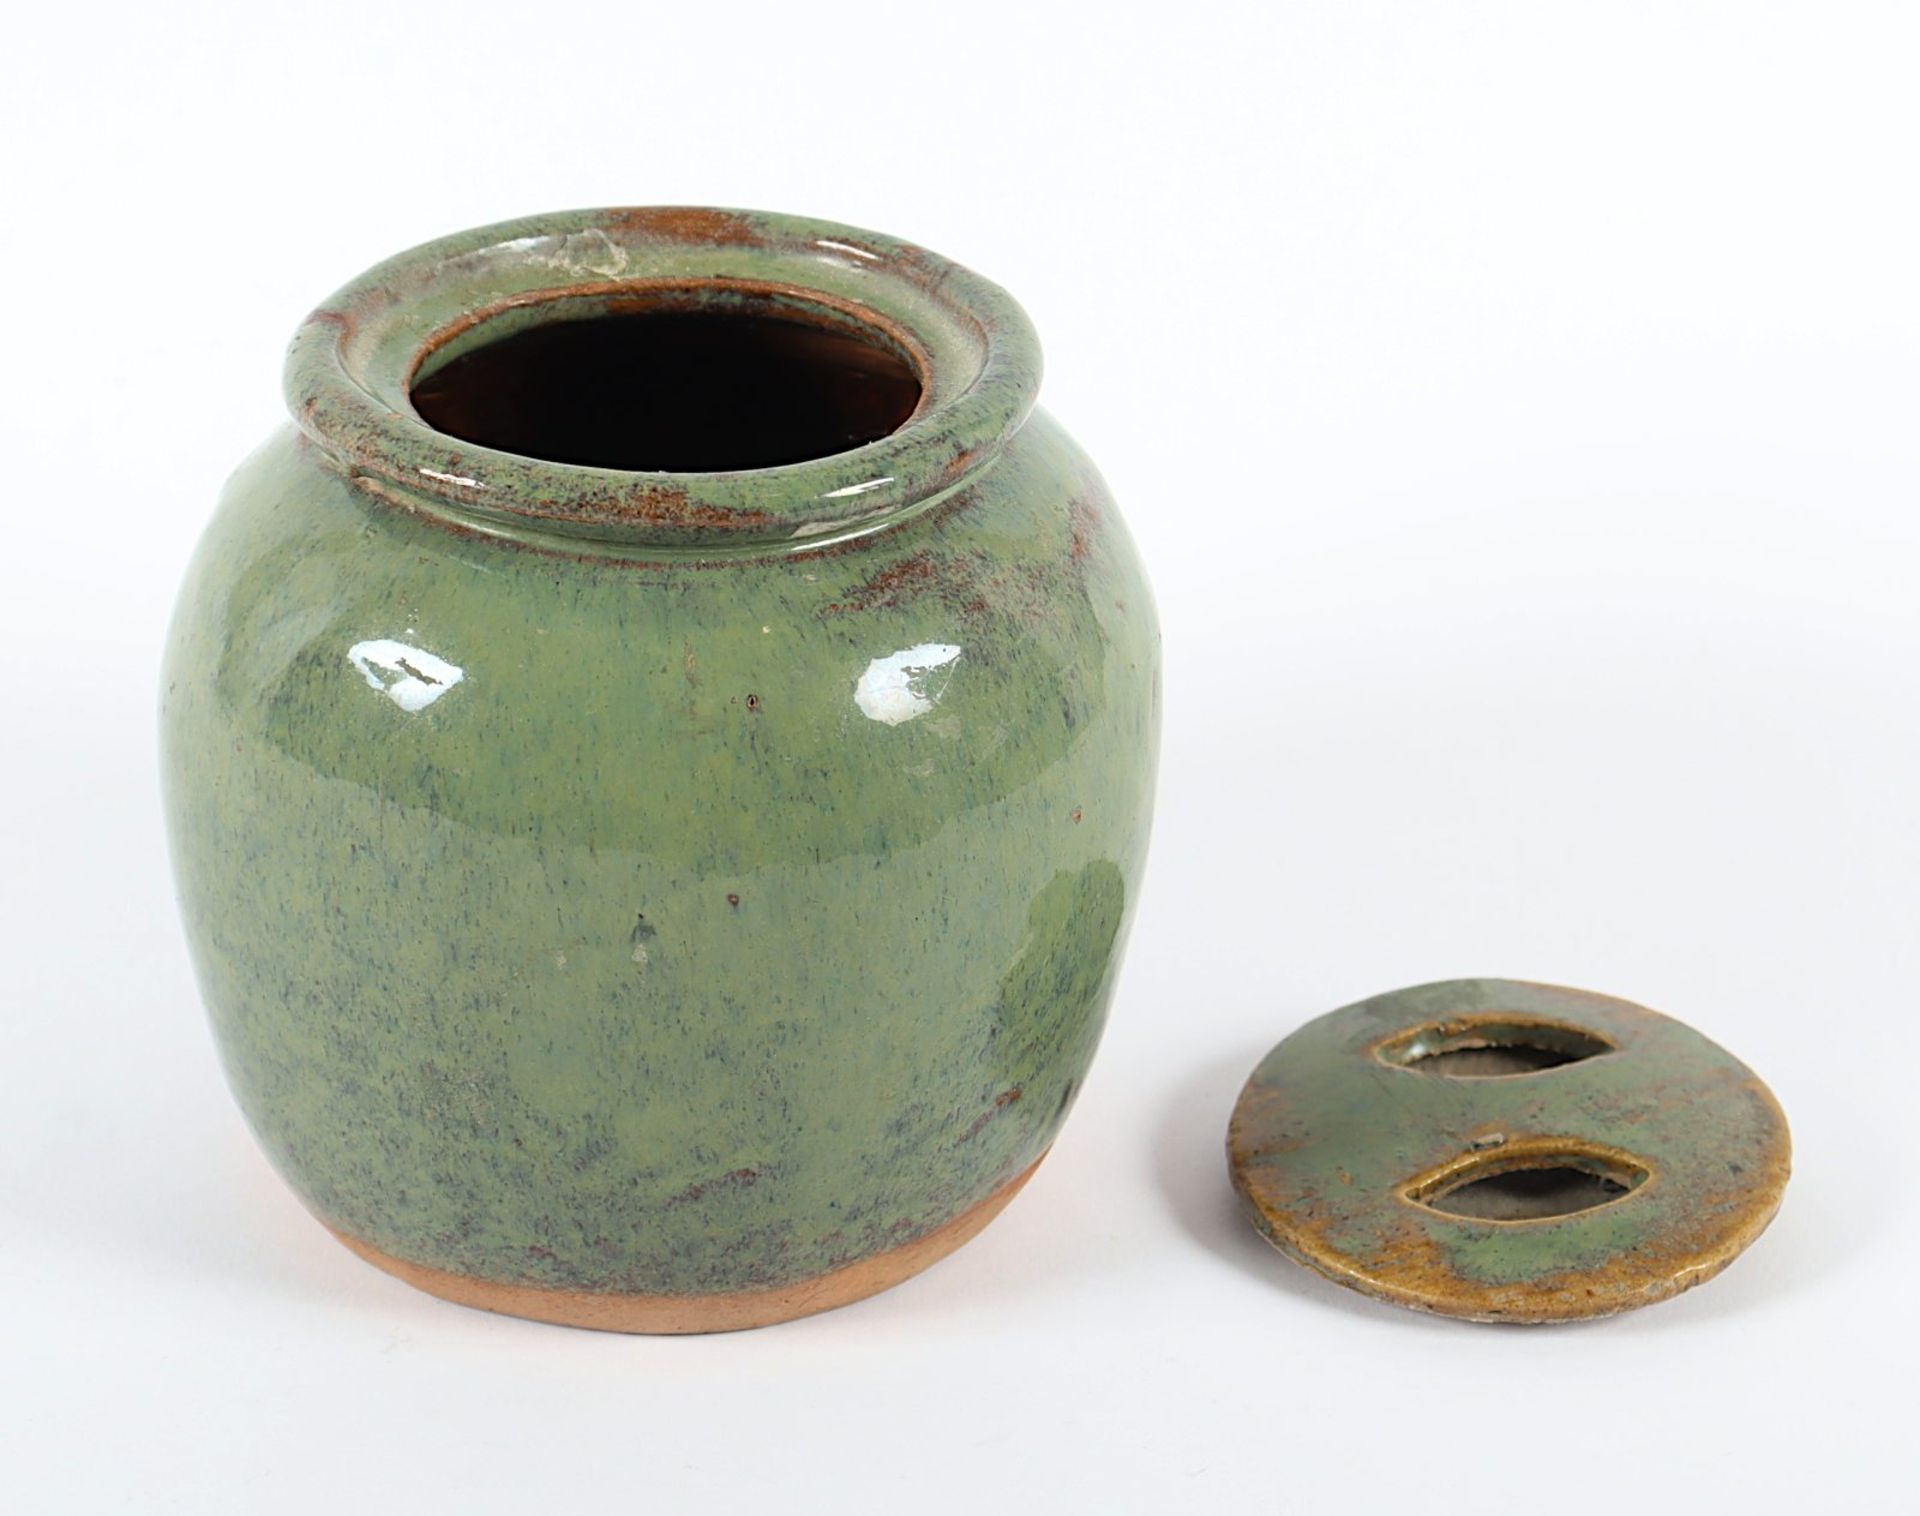 Topf, Keramik, Verlaufsglasur, China - Image 2 of 3